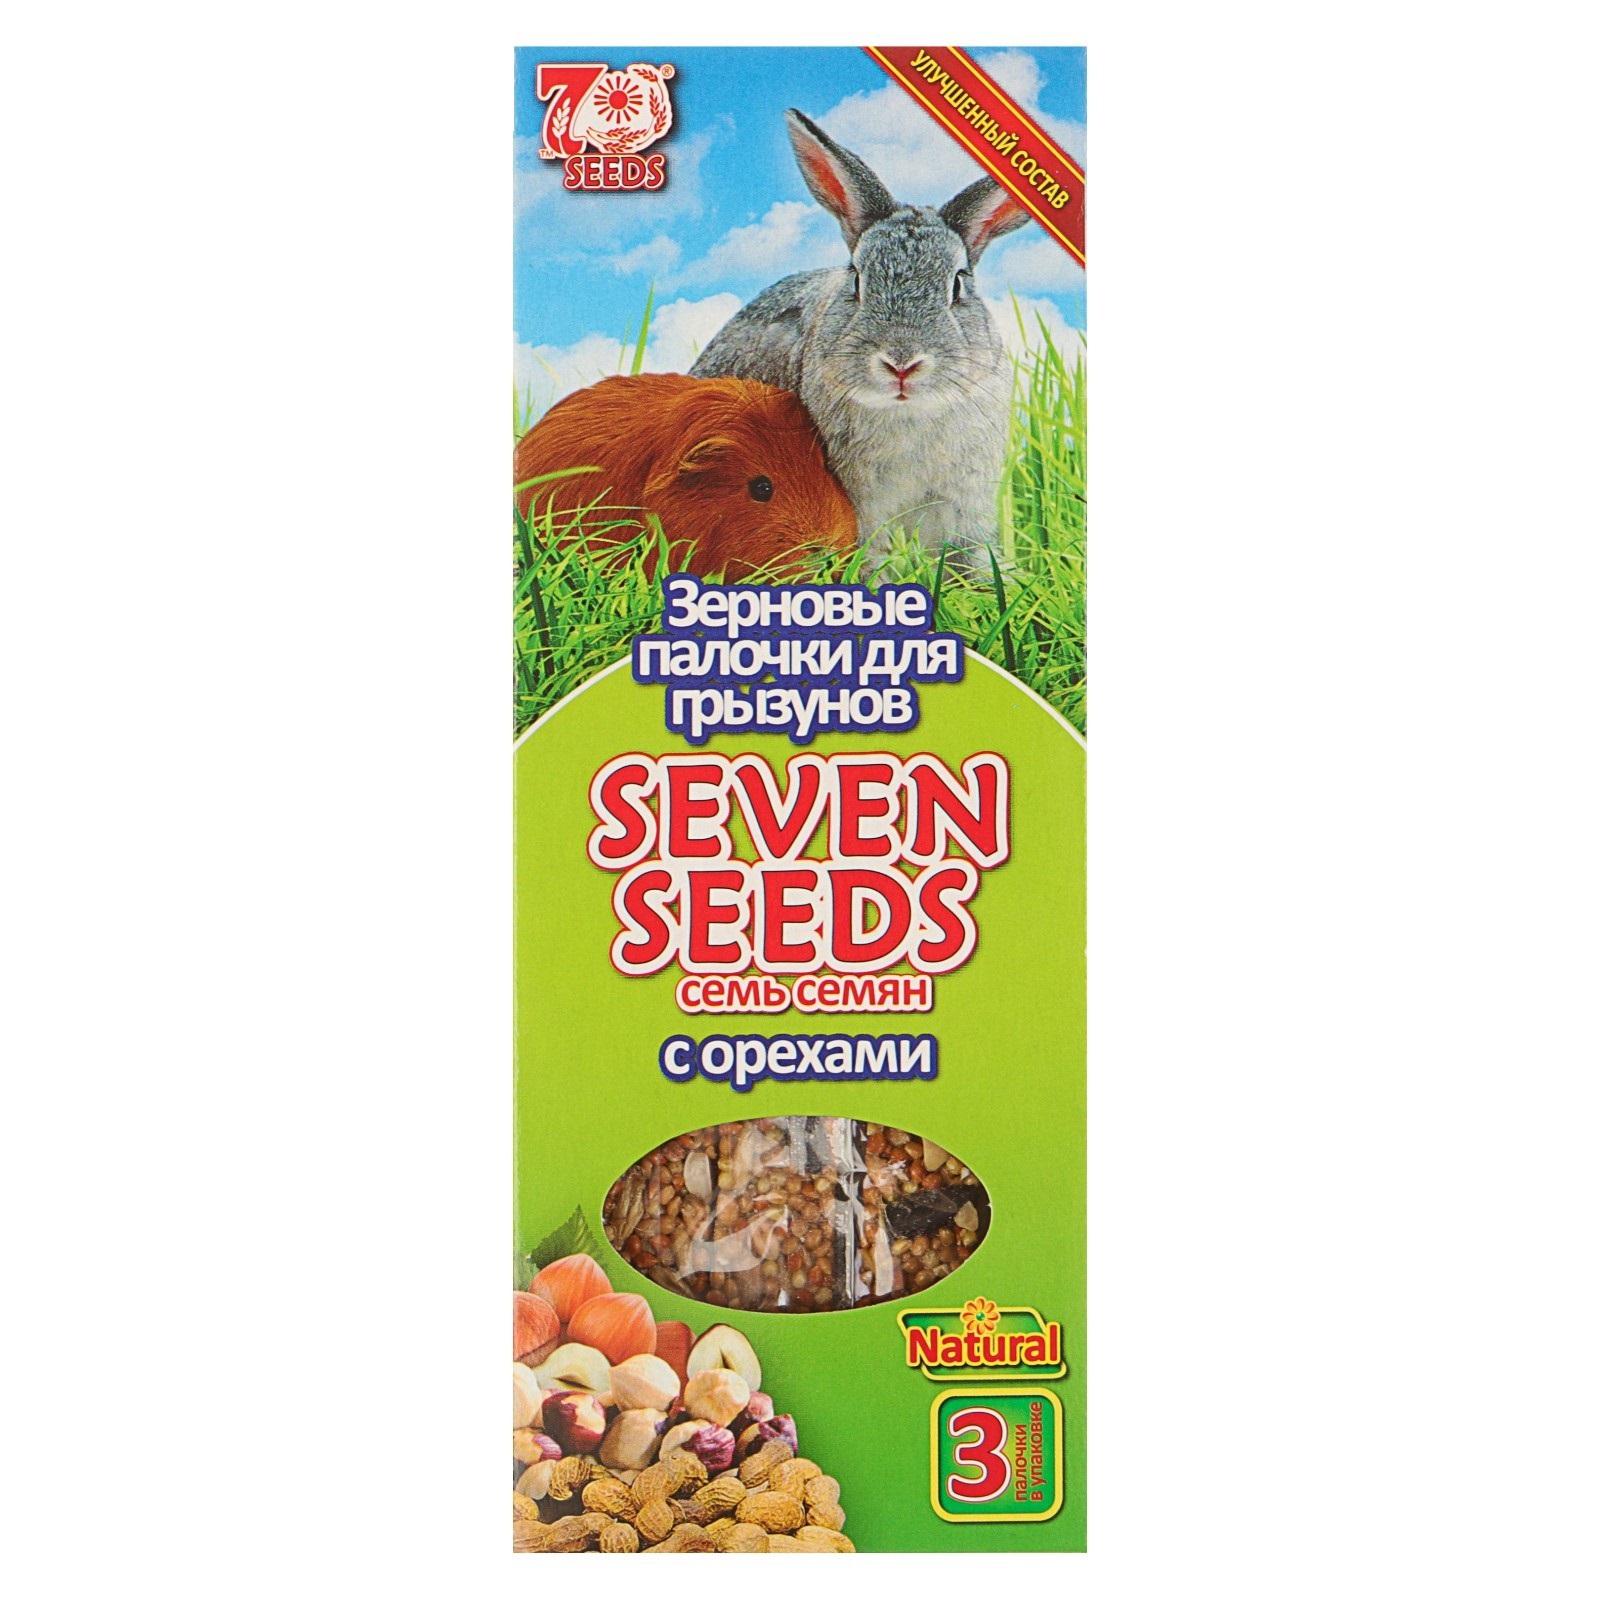 Семь Семян - палочки для грызунов Орехи, 3шт (90гр) (Seven Seeds)